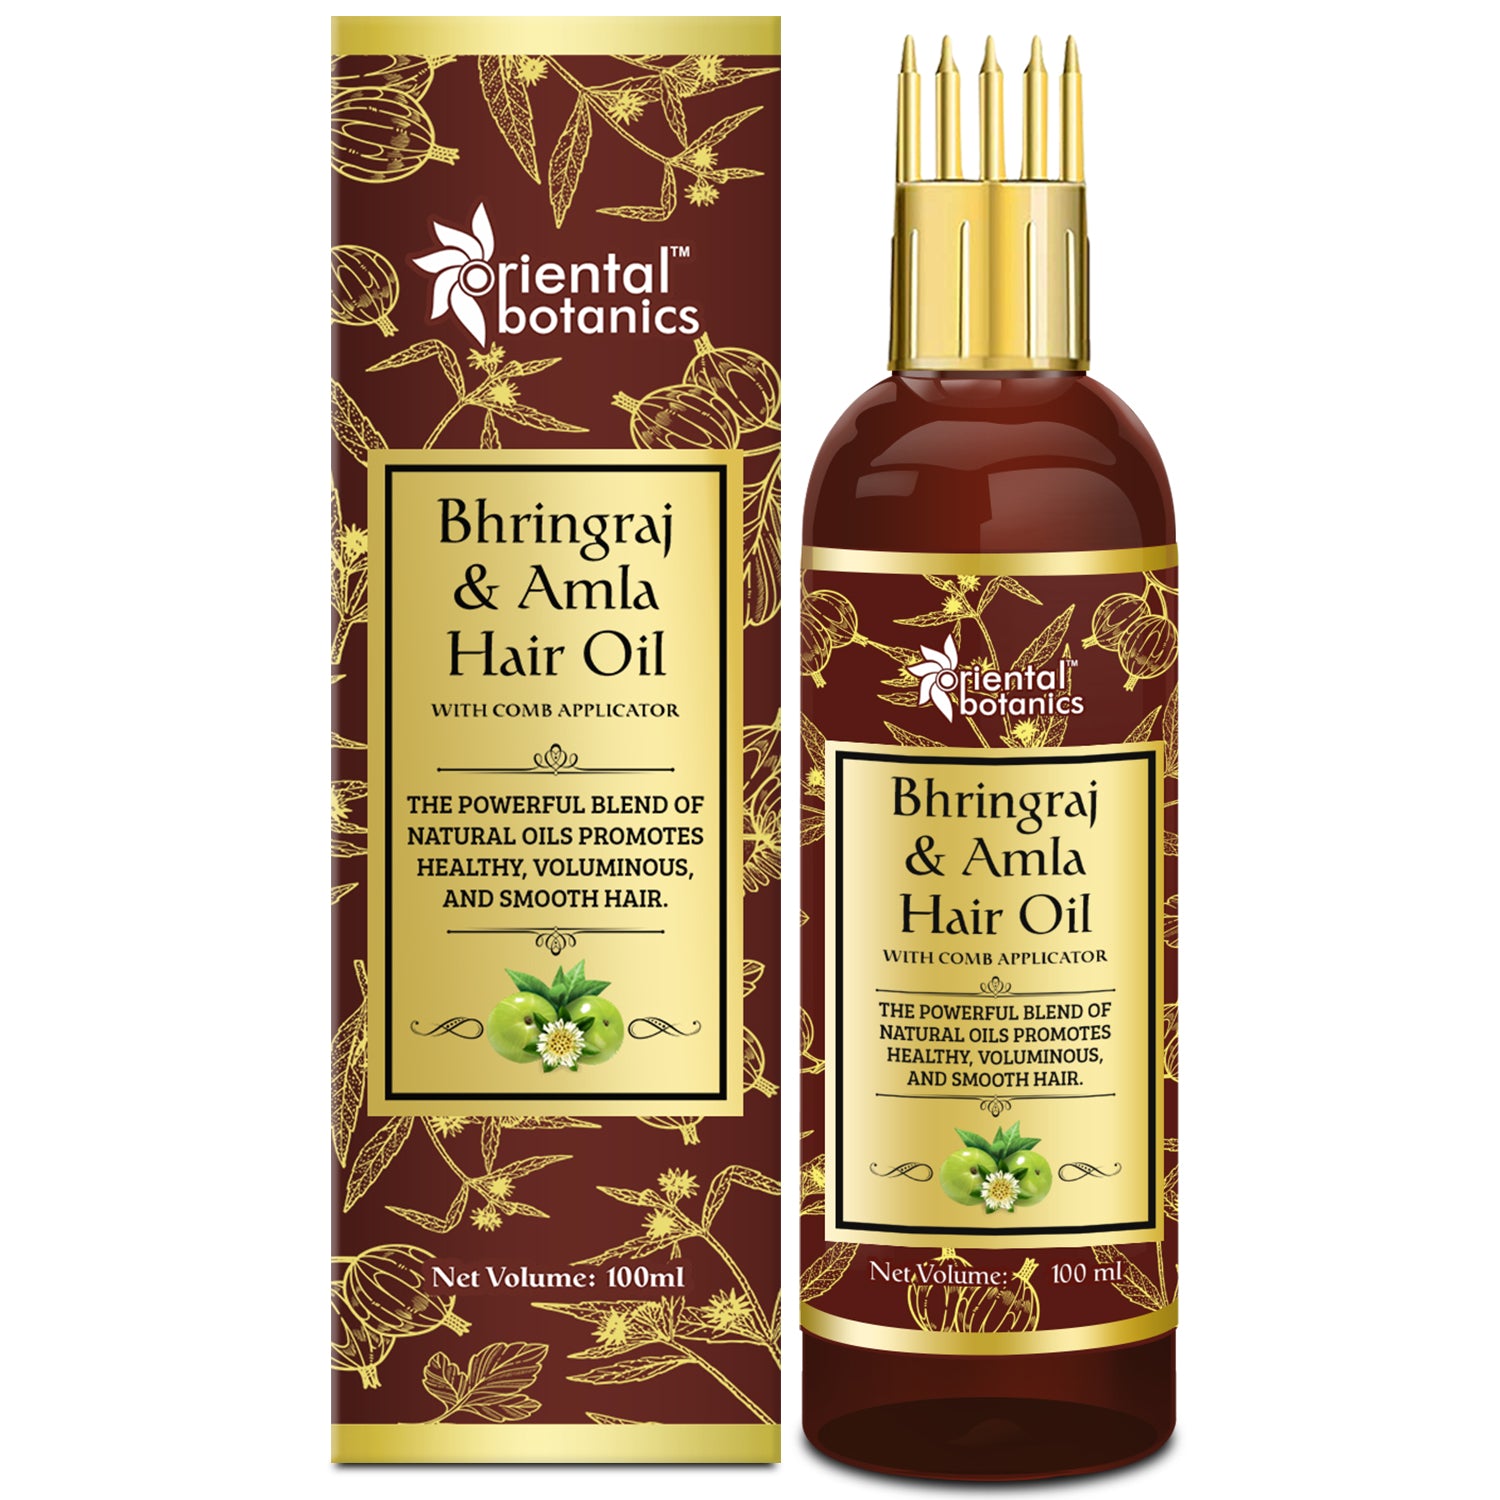 Oriental Botanics Bhringraj & Amla Hair Oil With Comb Applicator - Promotes Healthy, Voluminous & Smooth Hair, 100 ml